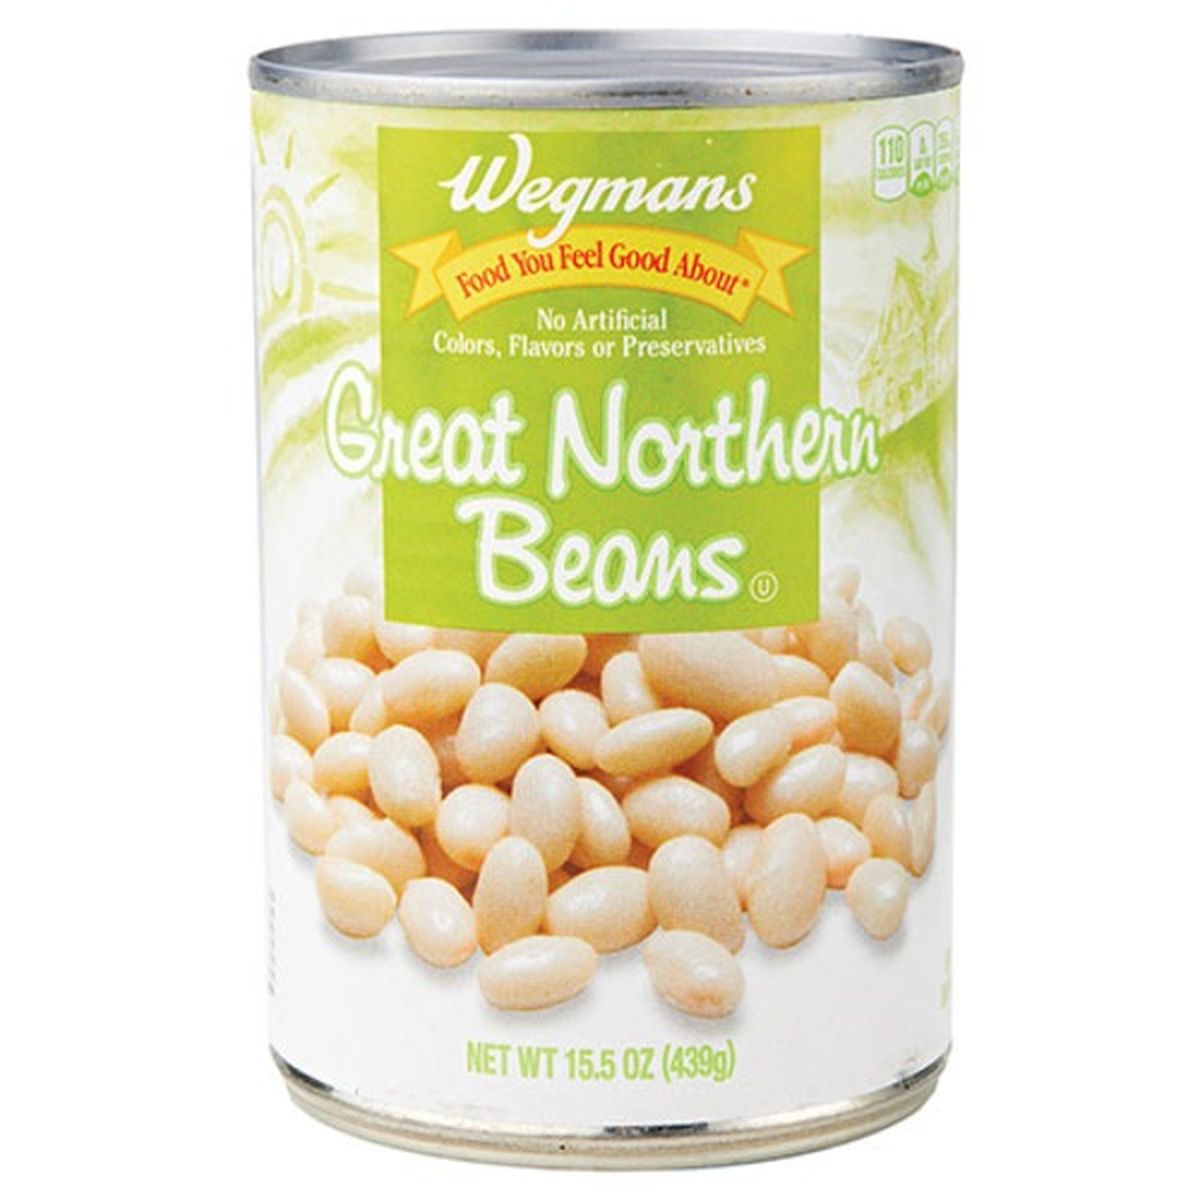 Calories in Wegmans Great Northern Beans